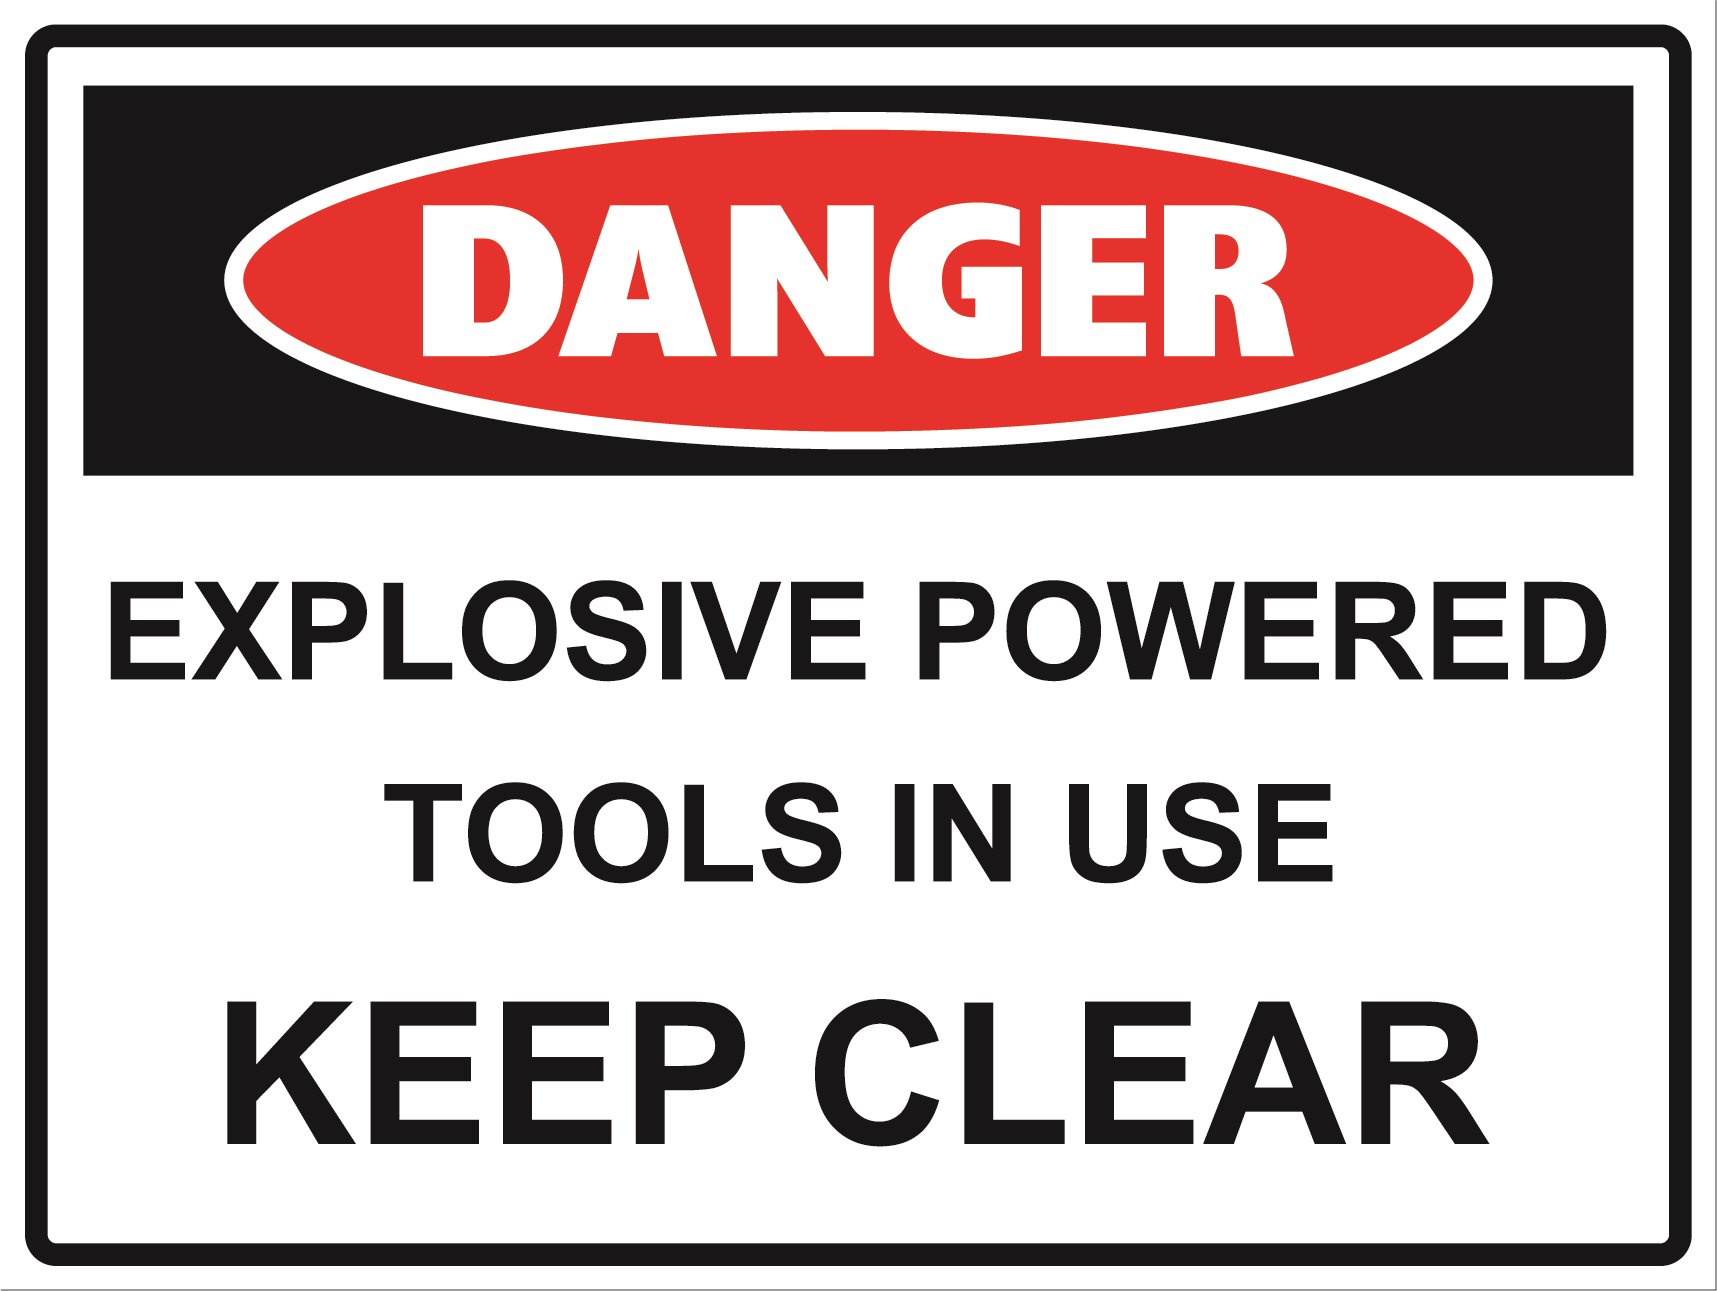 Danger - Explosive Powered Tools in Use - Keep Clear - Metal